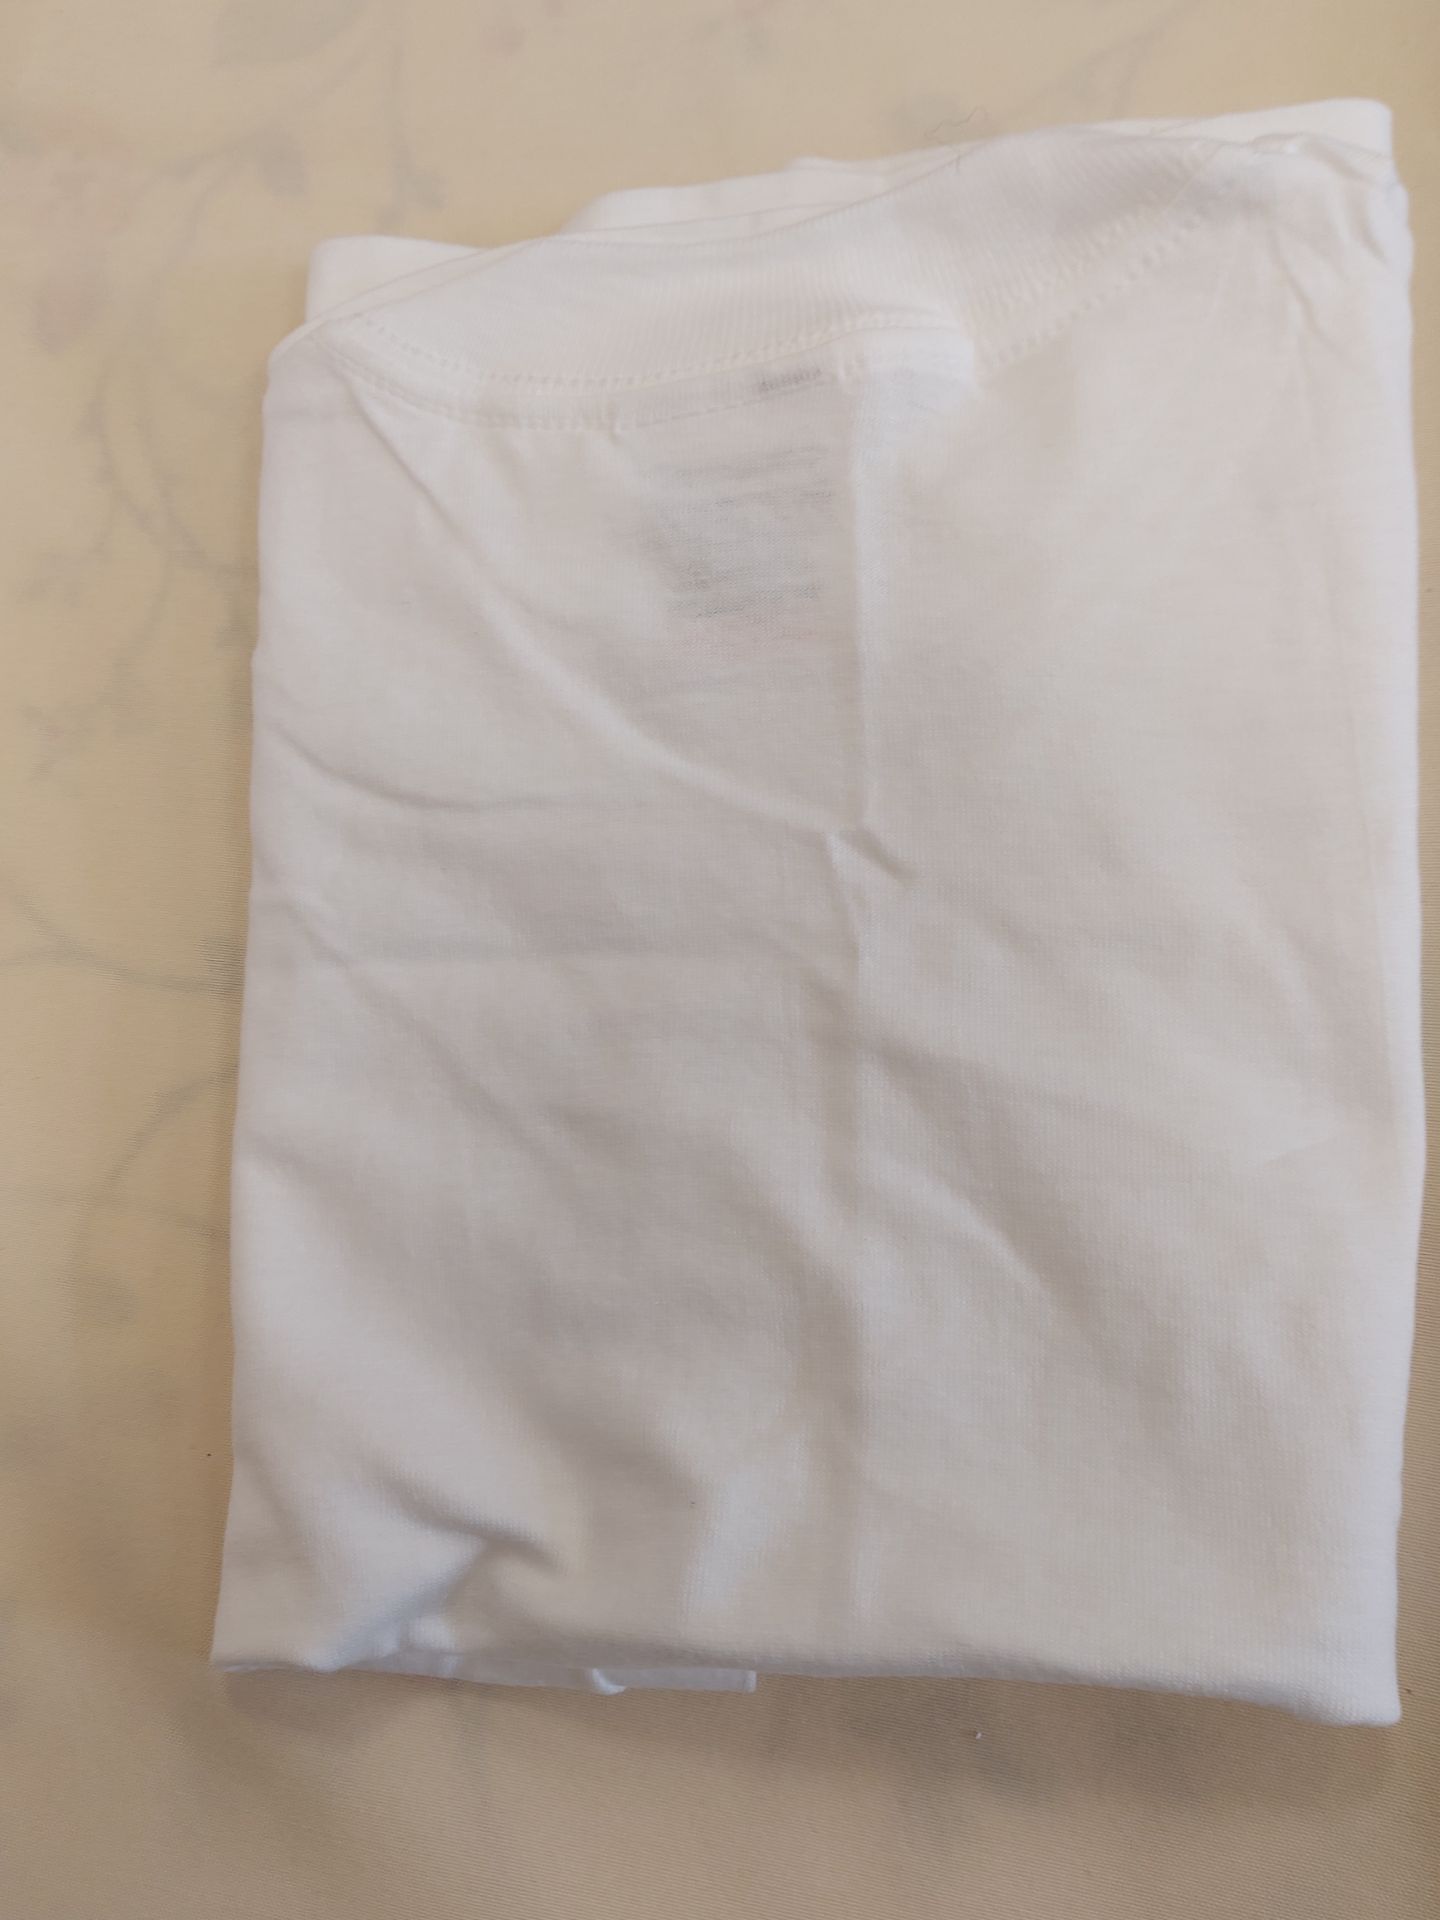 Pack of 6 White Teeshirts - Image 3 of 6